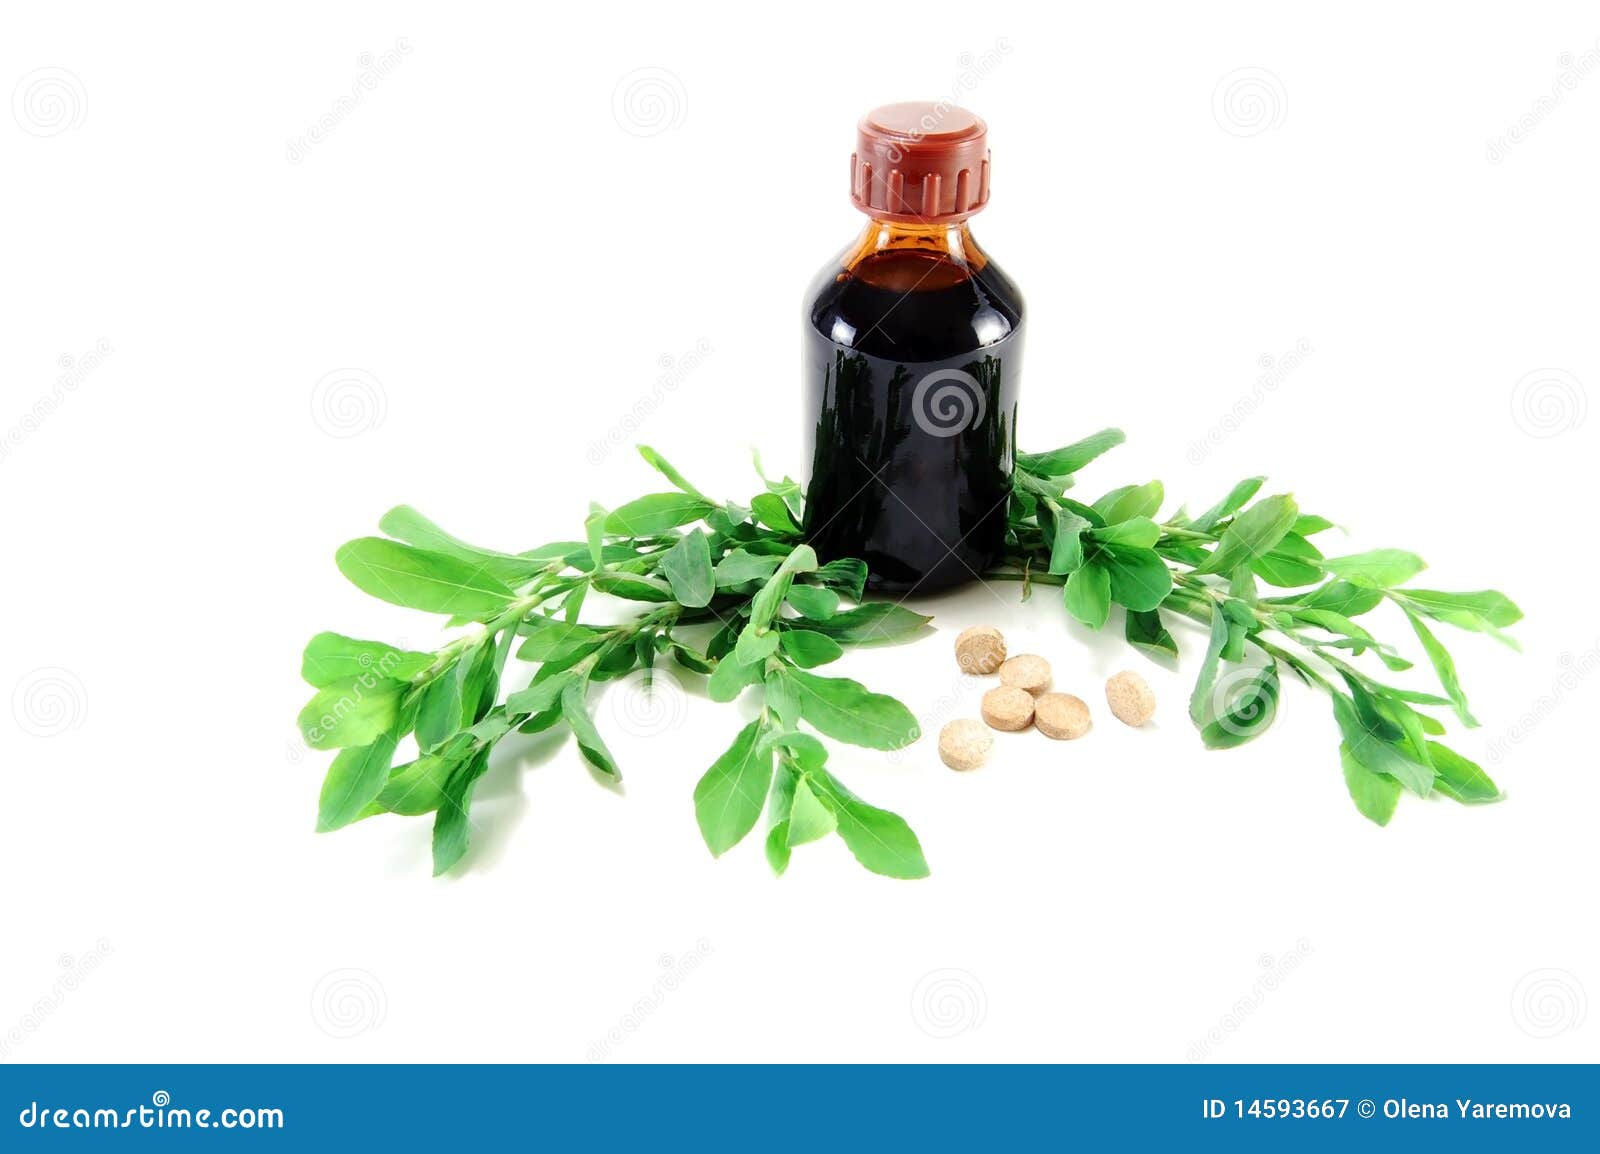 medicative herb